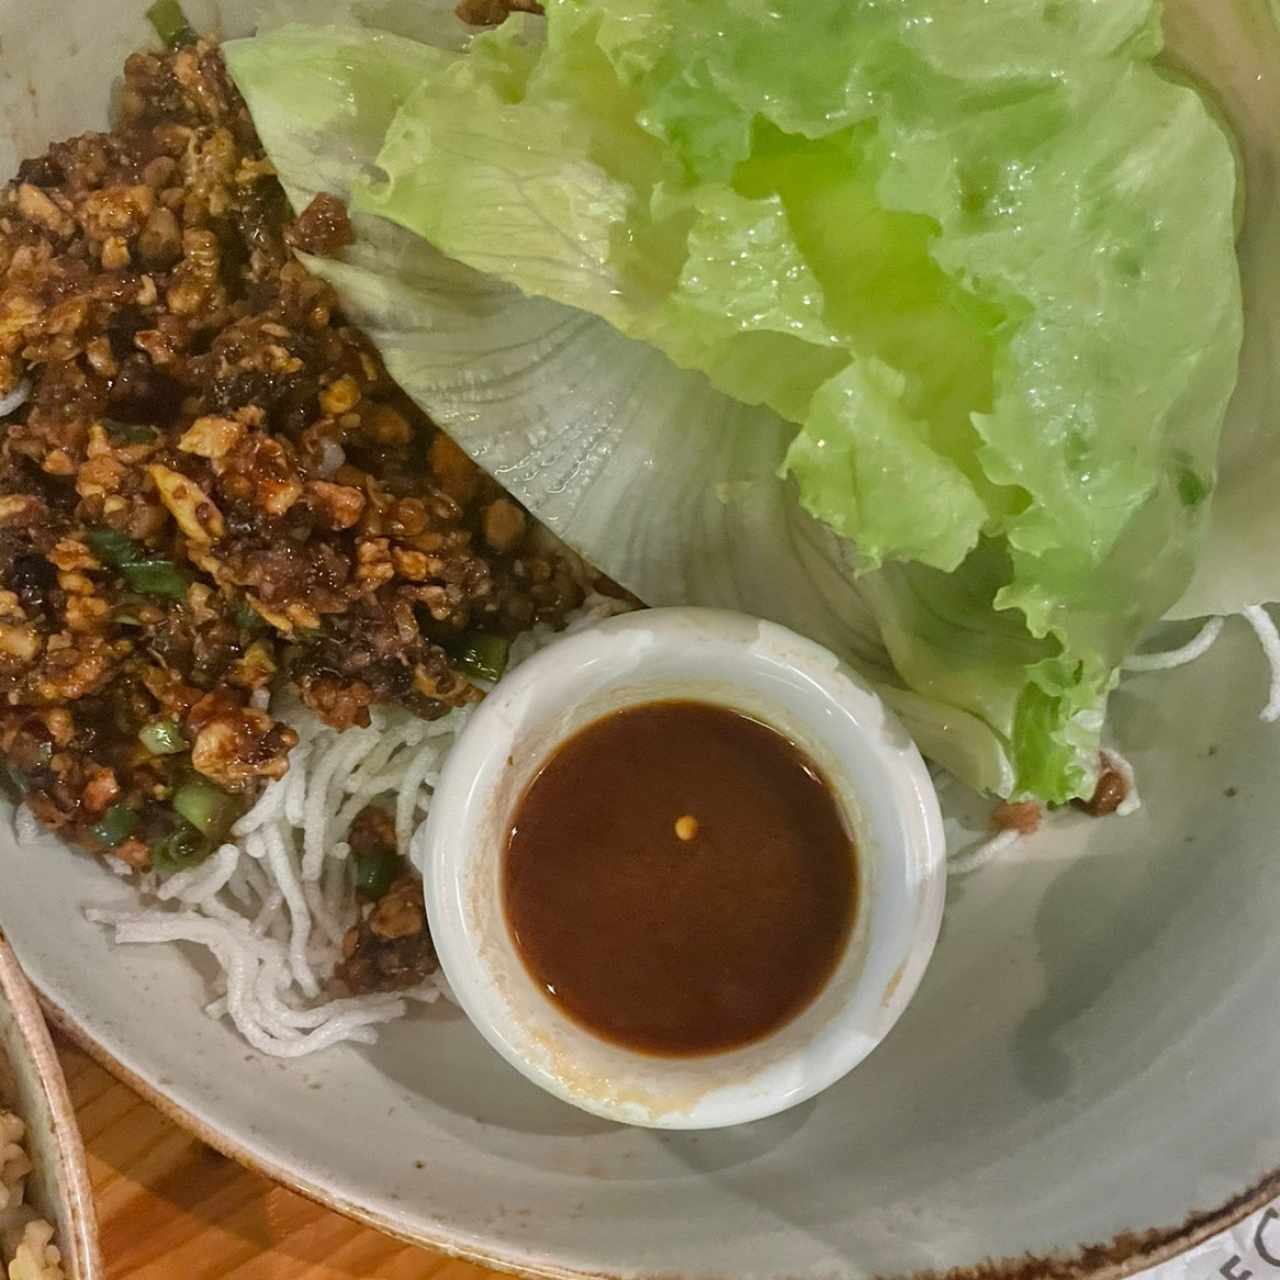 Entradas - Chang's Lettuce Wraps